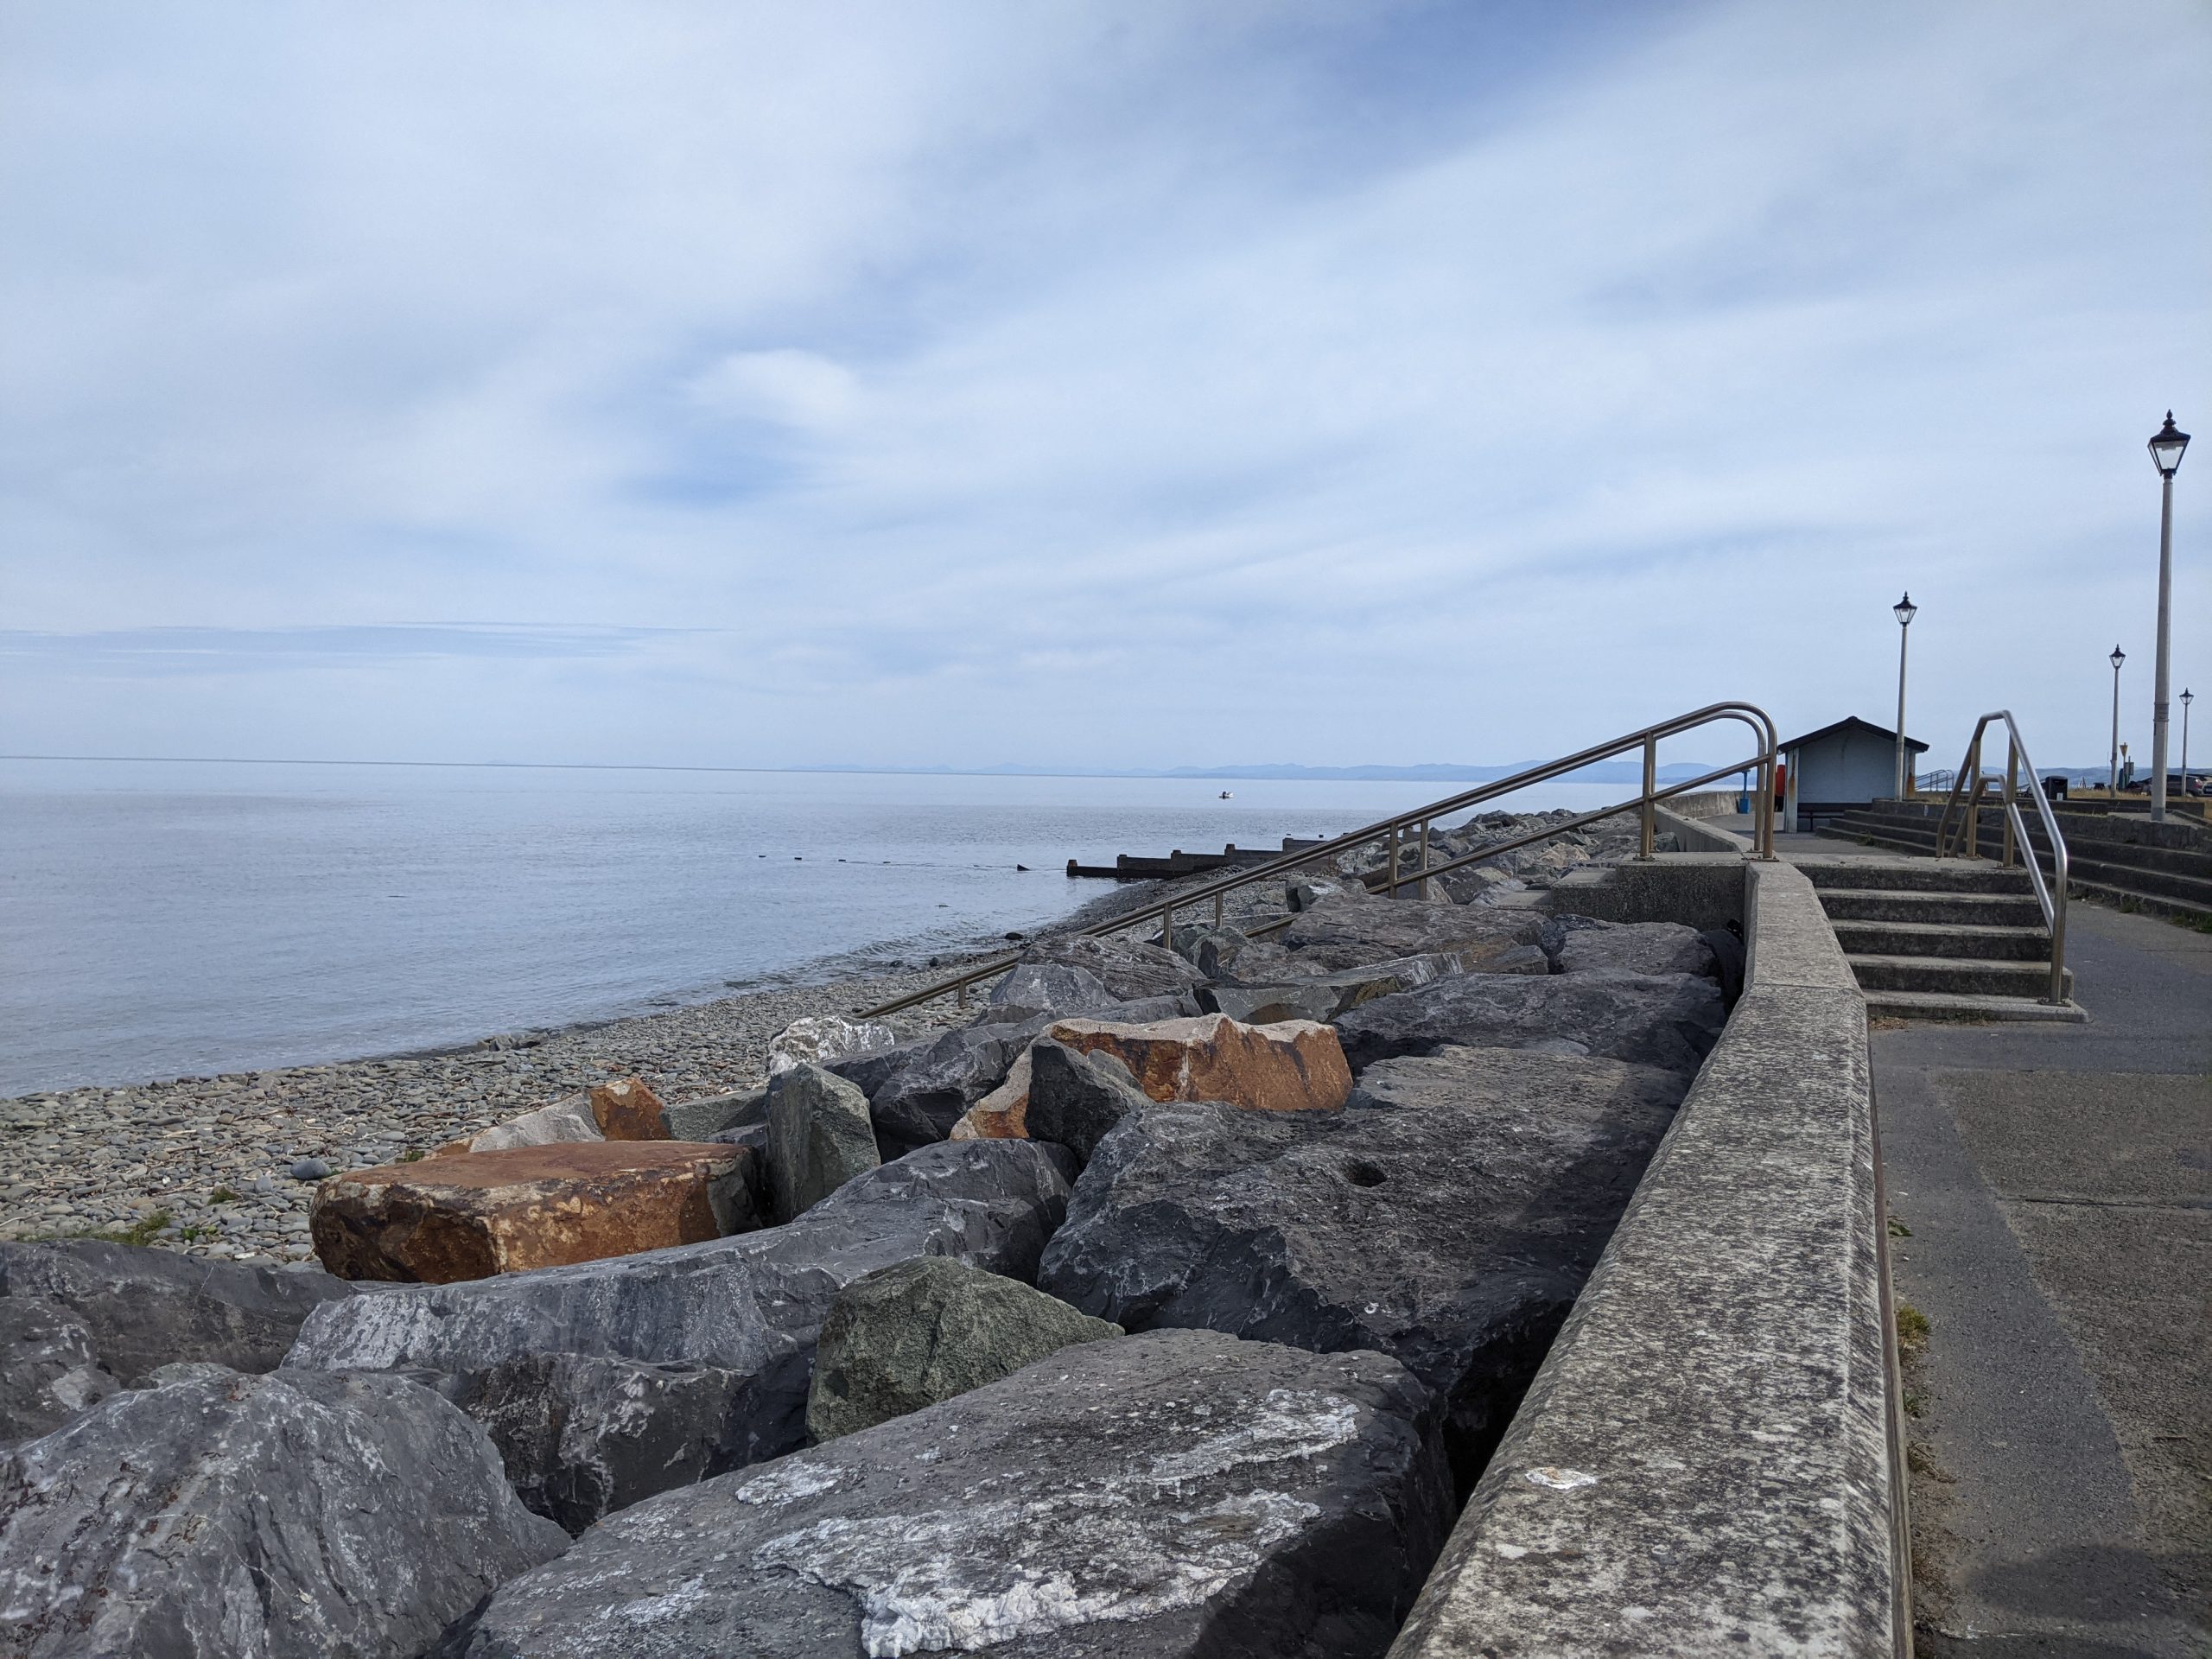 Concrete promenade along seafront with rock defences.